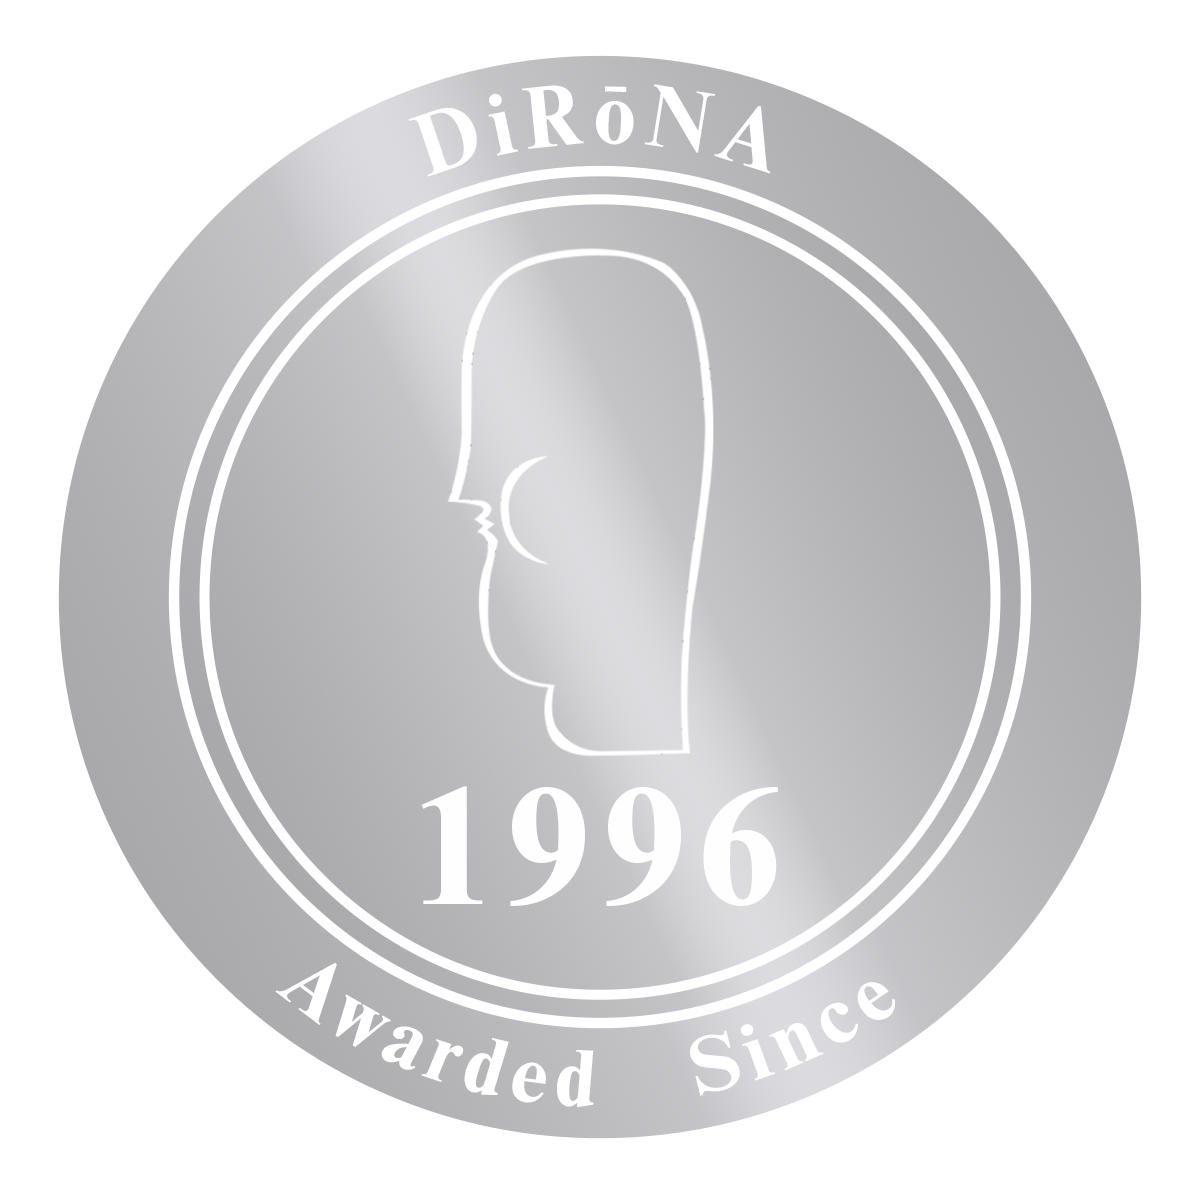 DiRoNA Awarded Restaurant Distinguished Restaurants of North America Carlucci Since 1996 Badge